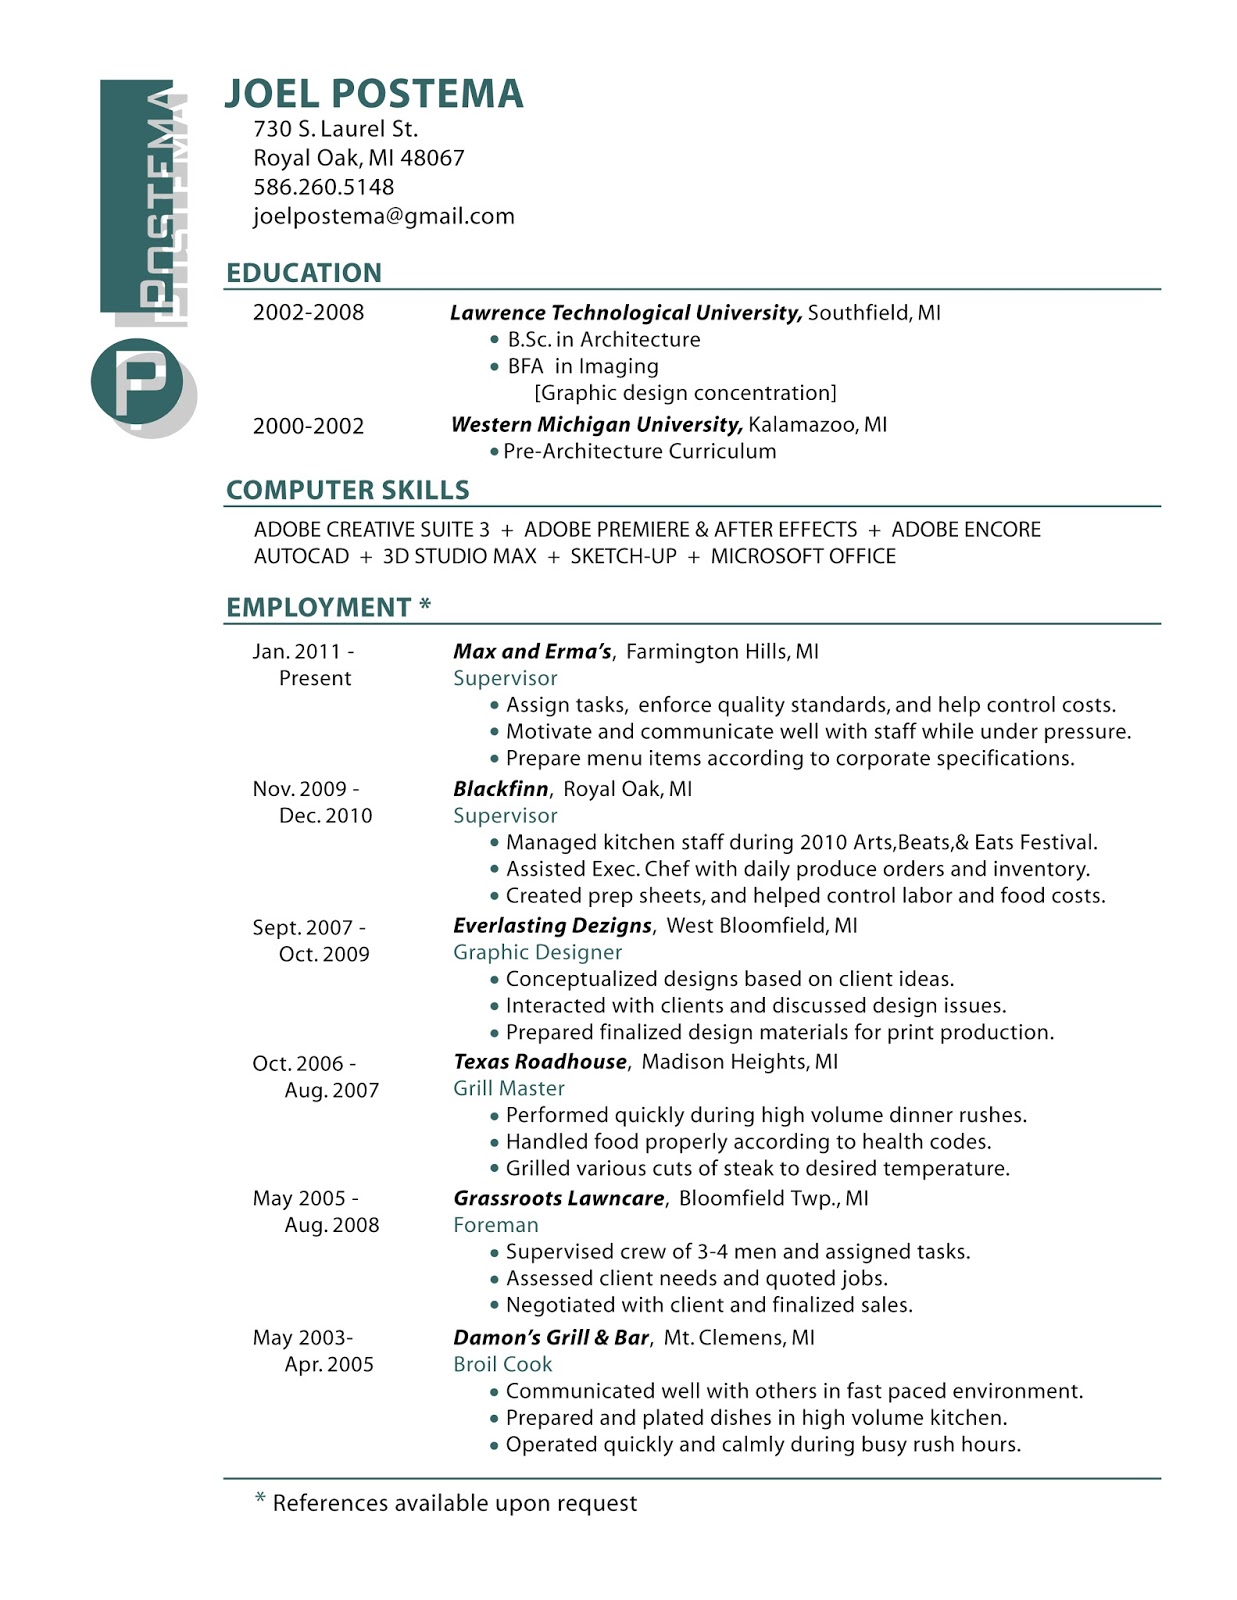 Web design resume help